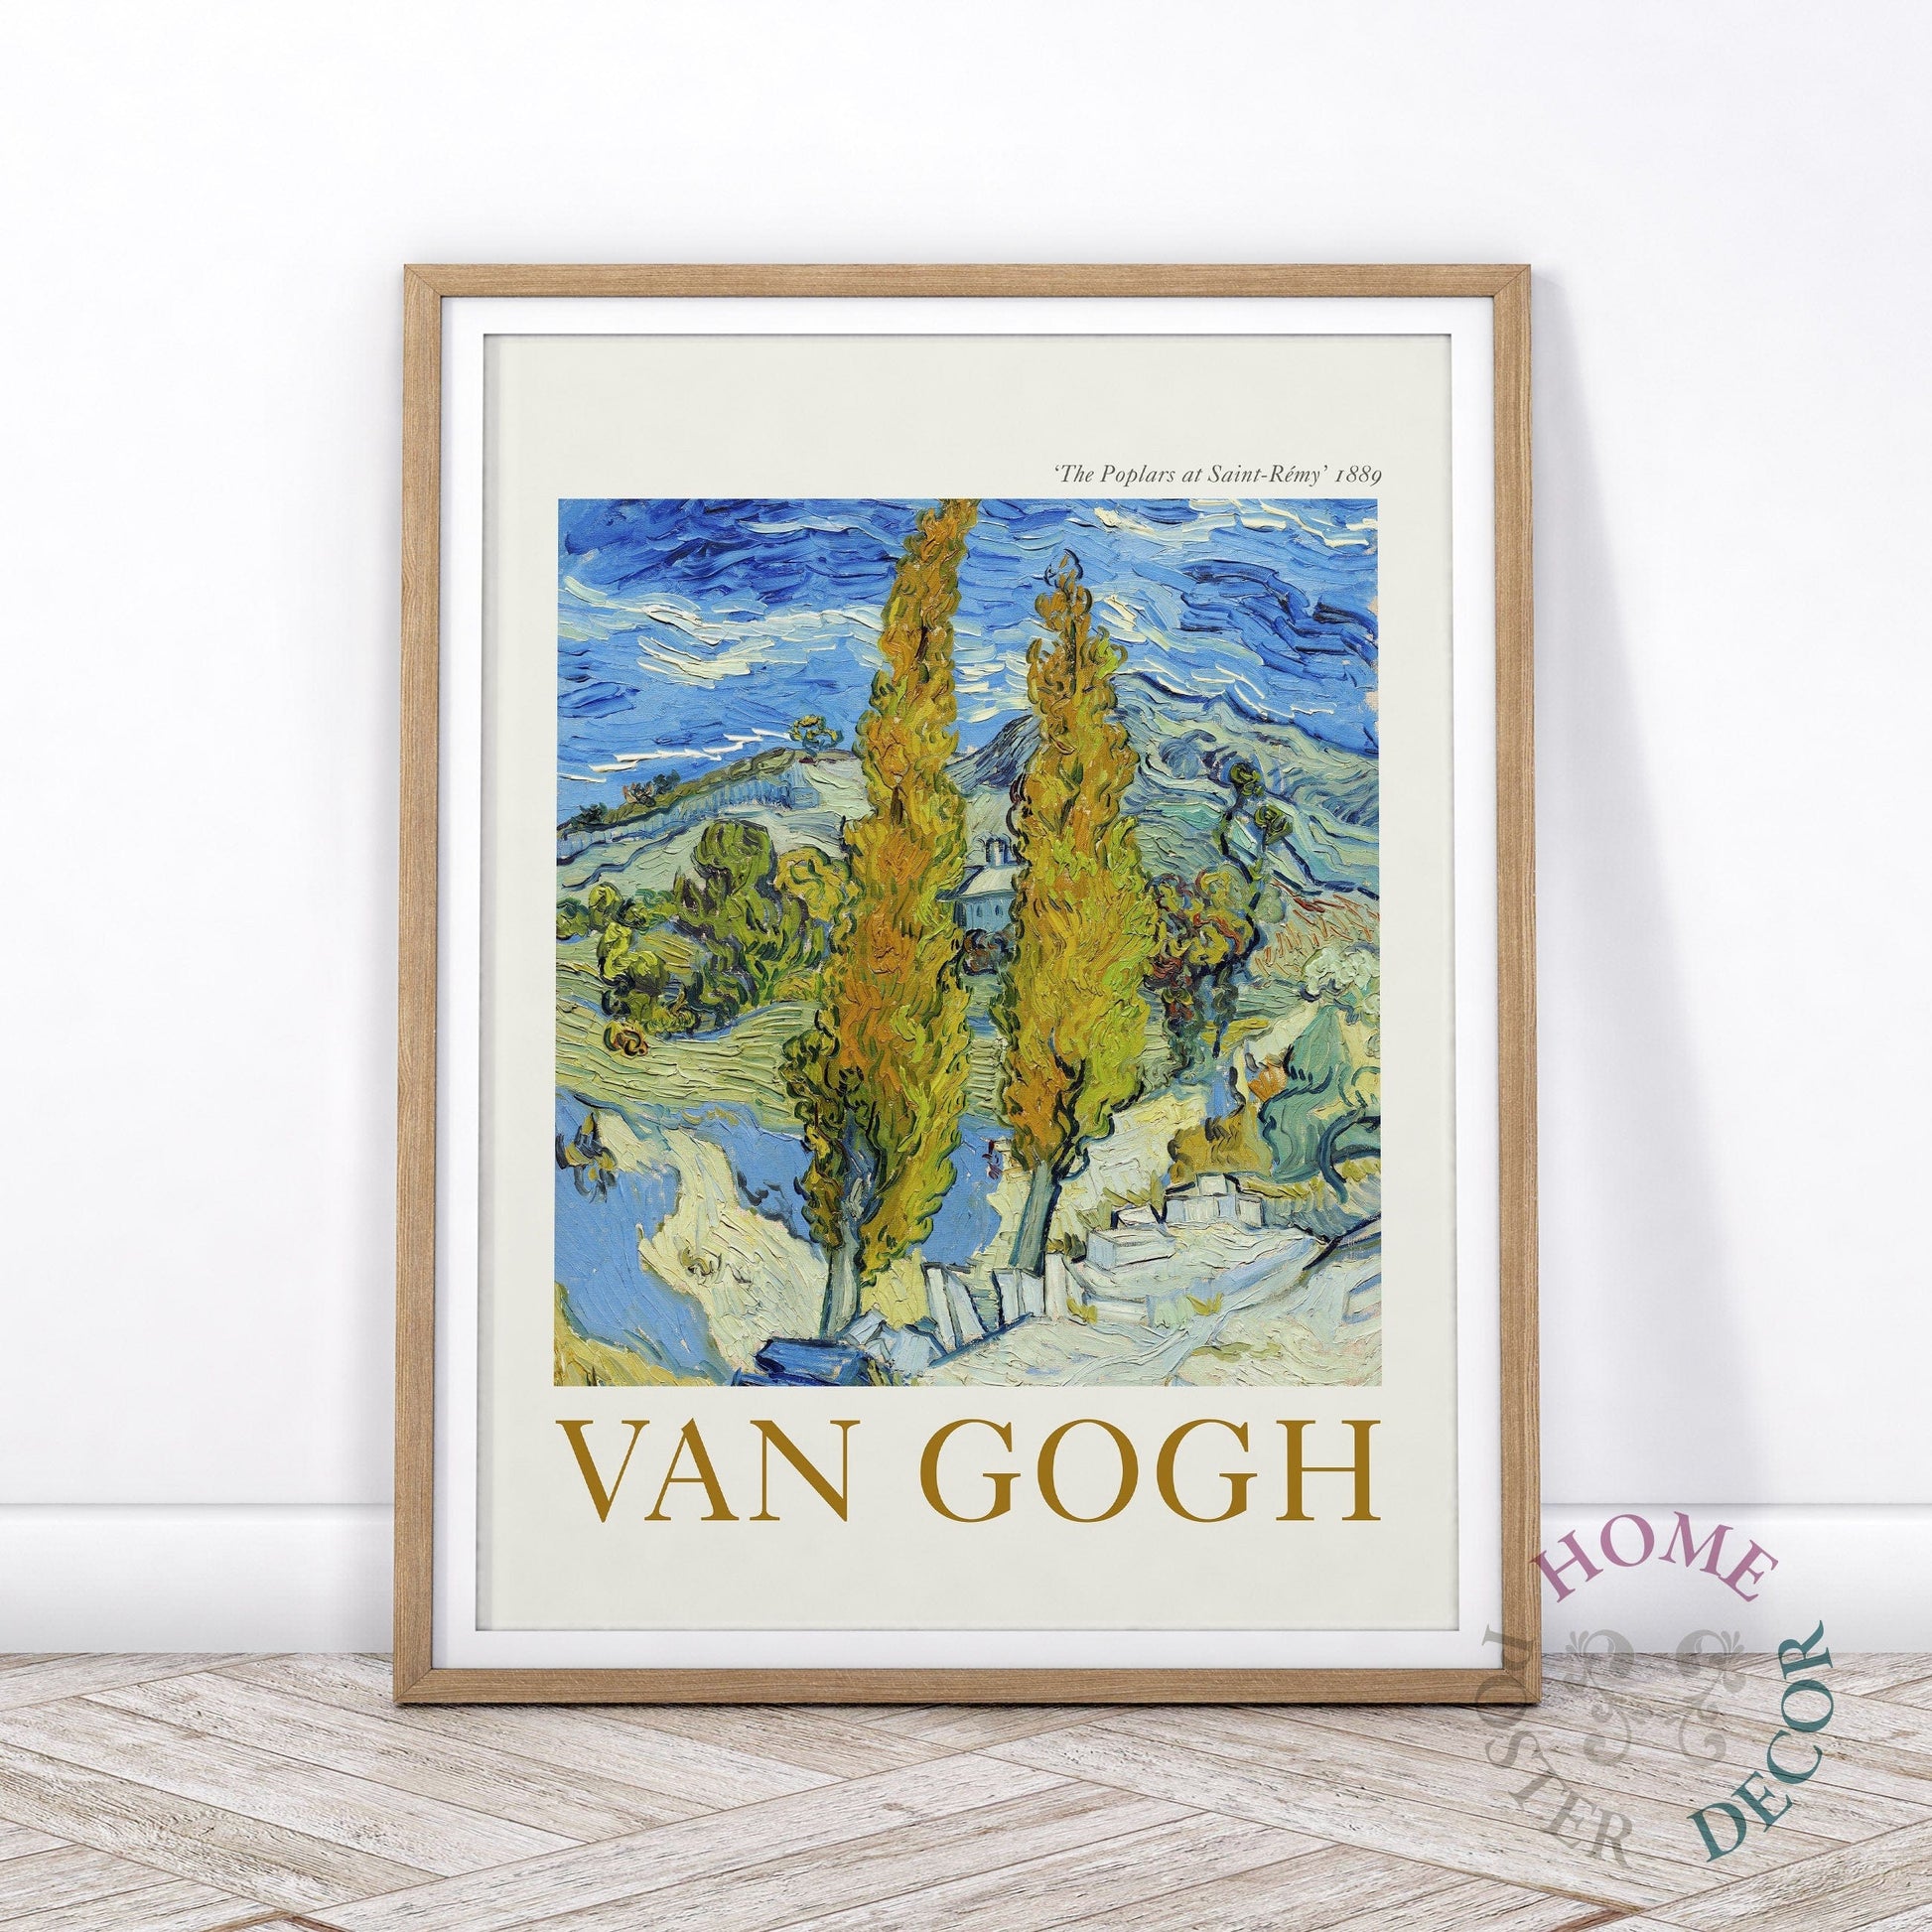 Home Poster Decor Single Van Gogh Art, The Poplars, Tree Landscape, Living Room Wall Art